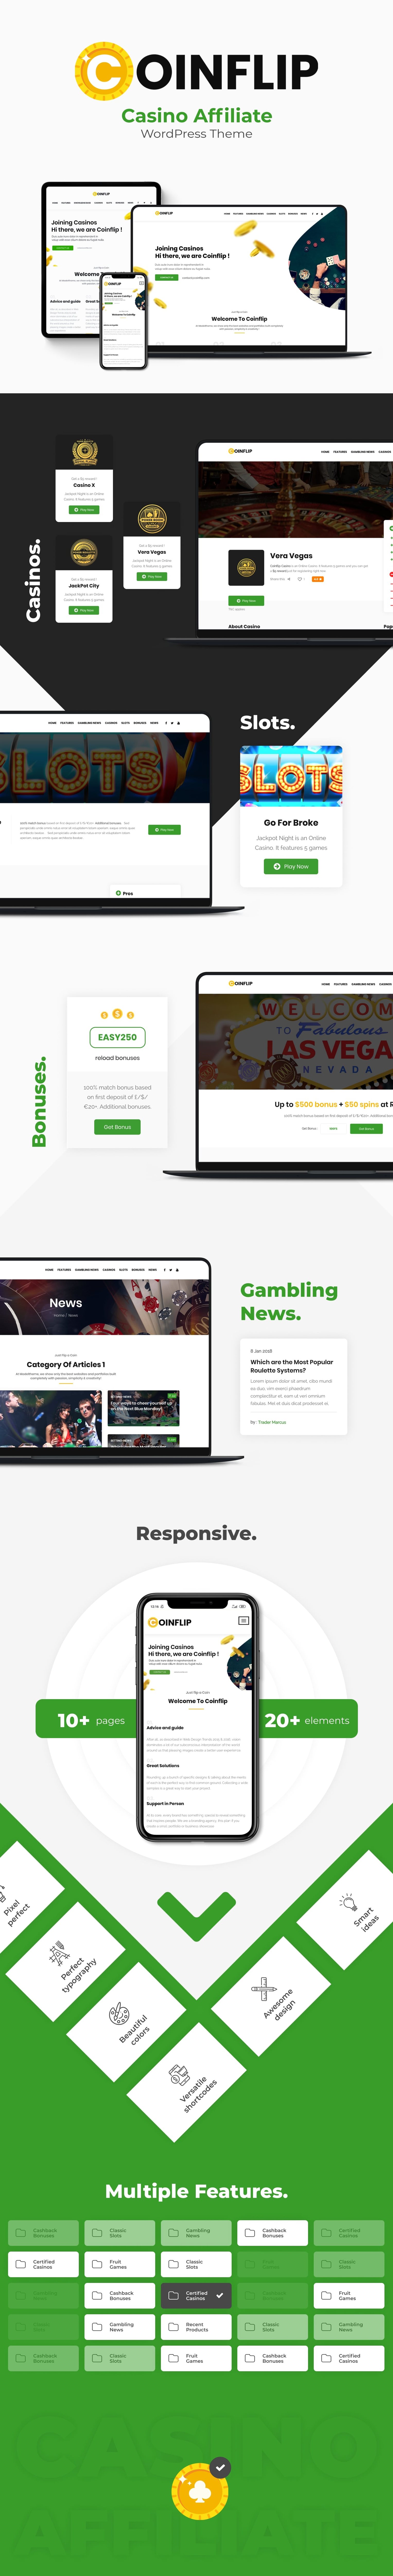 Coinflip - Casino Affiliate WordPress Theme - 2